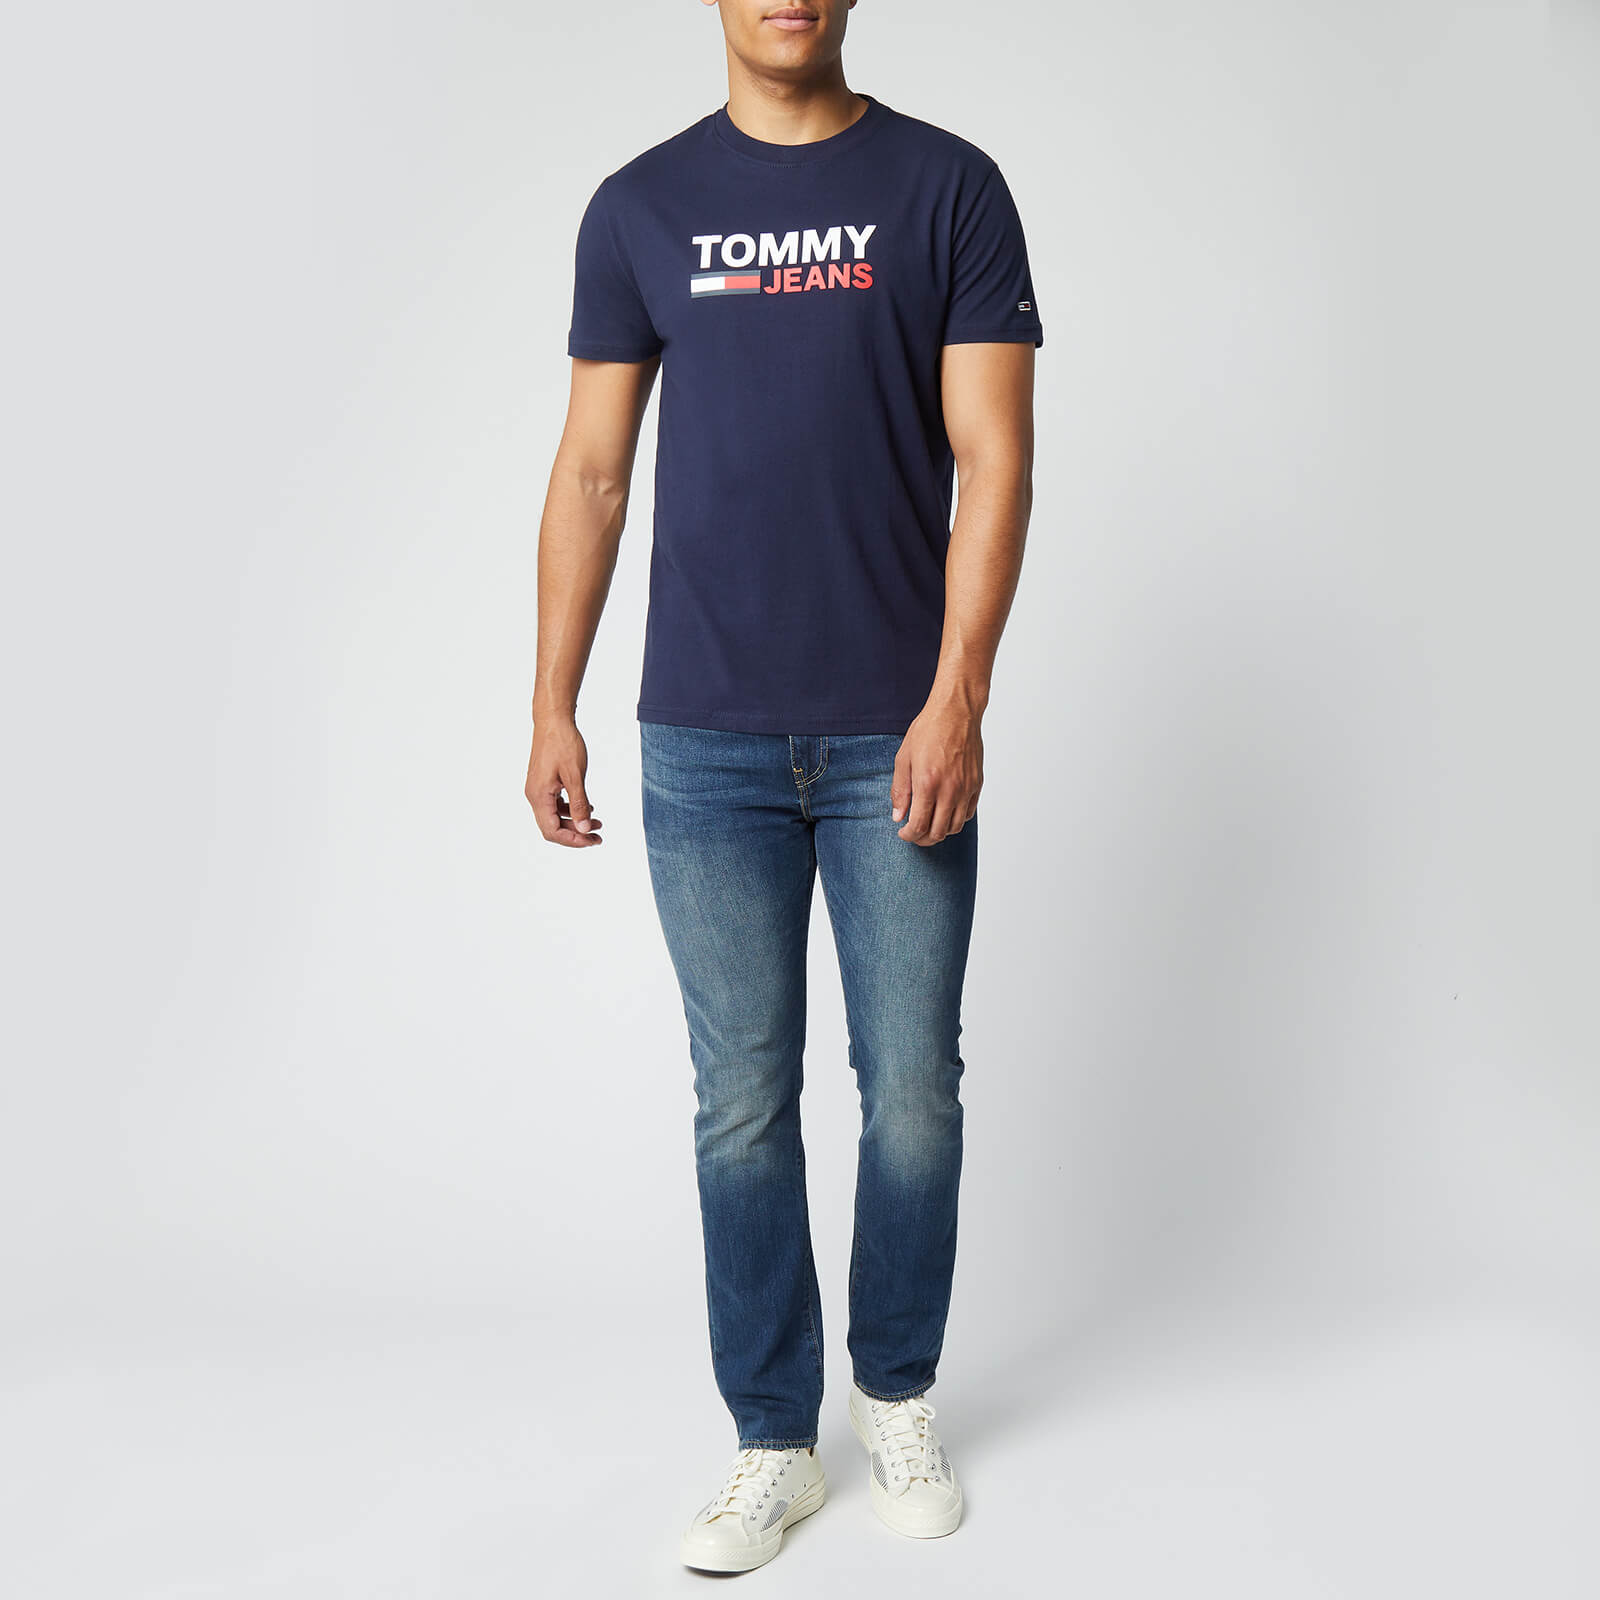 Tommy Jeans Men's Corporate Logo T-Shirt - Twilight Navy - S